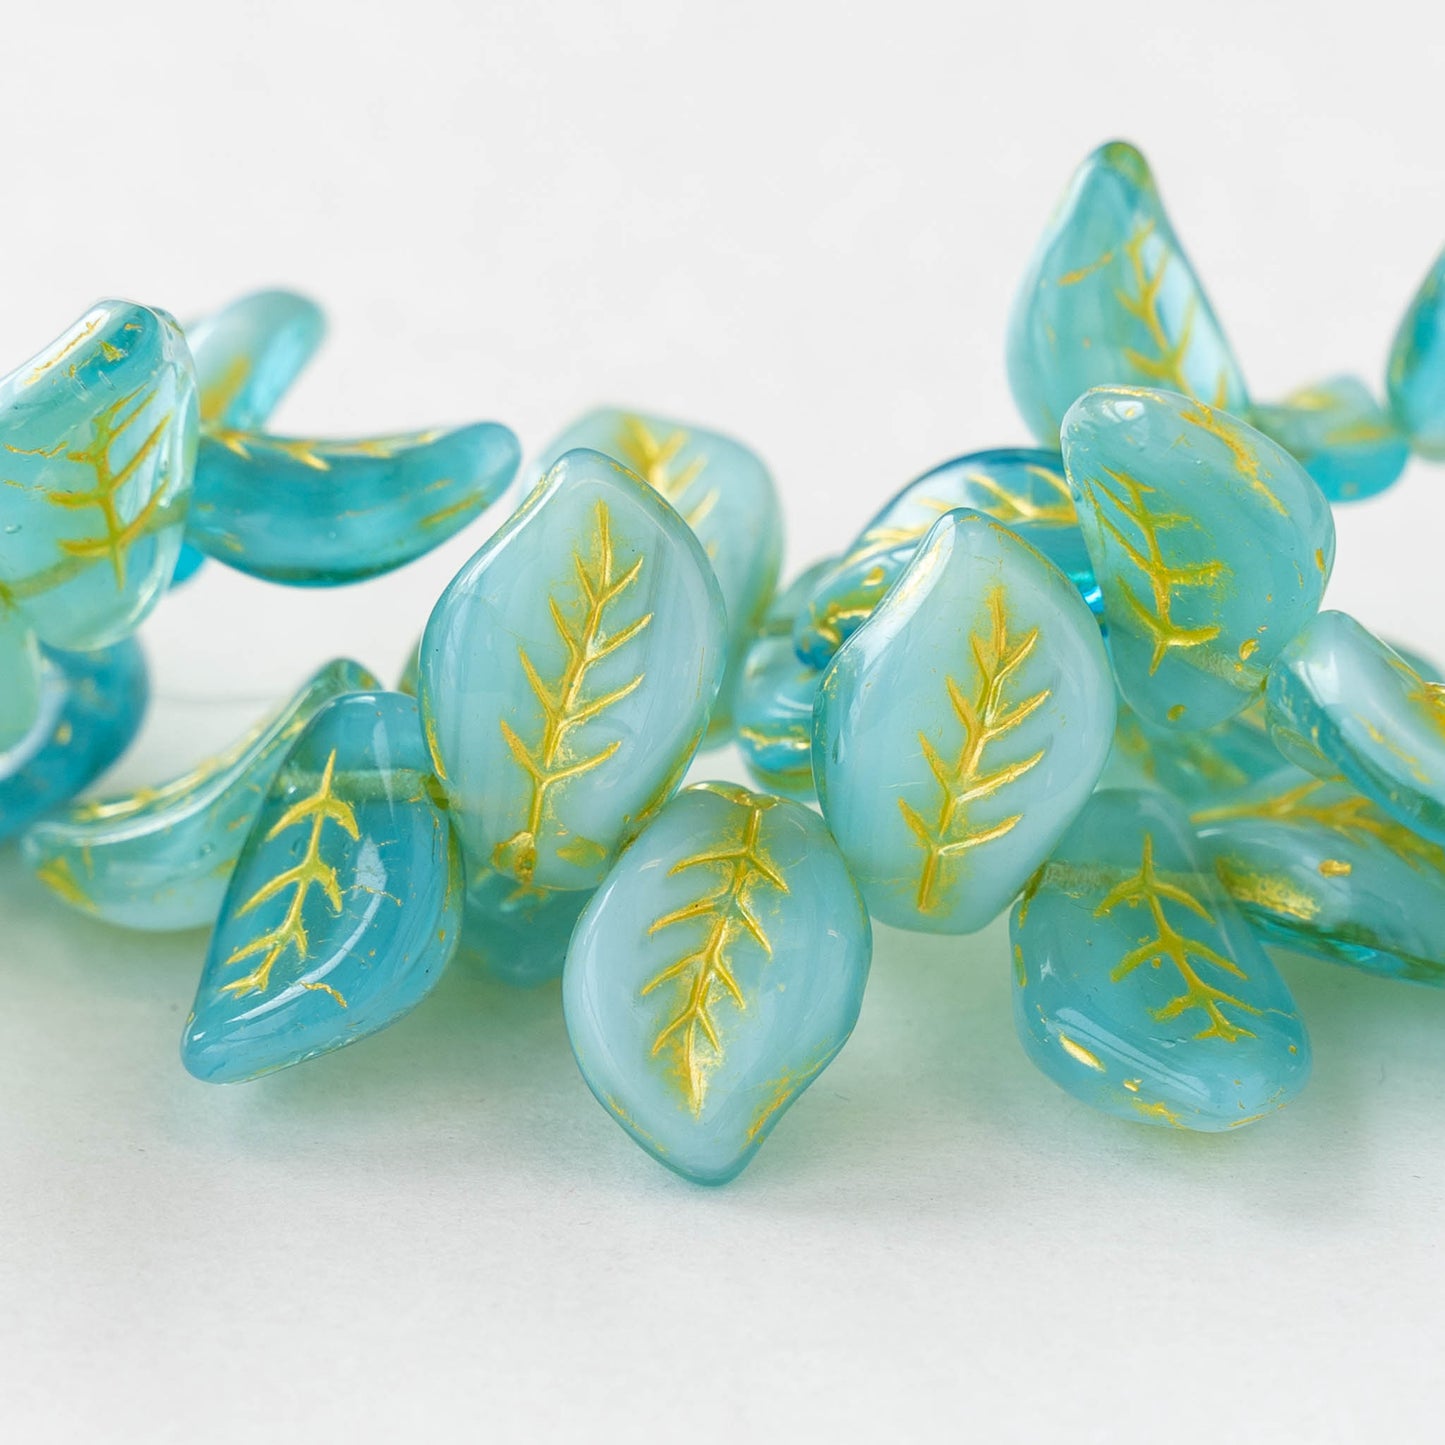 14x10mm Leaf Beads - Seafoam with Gold - 12